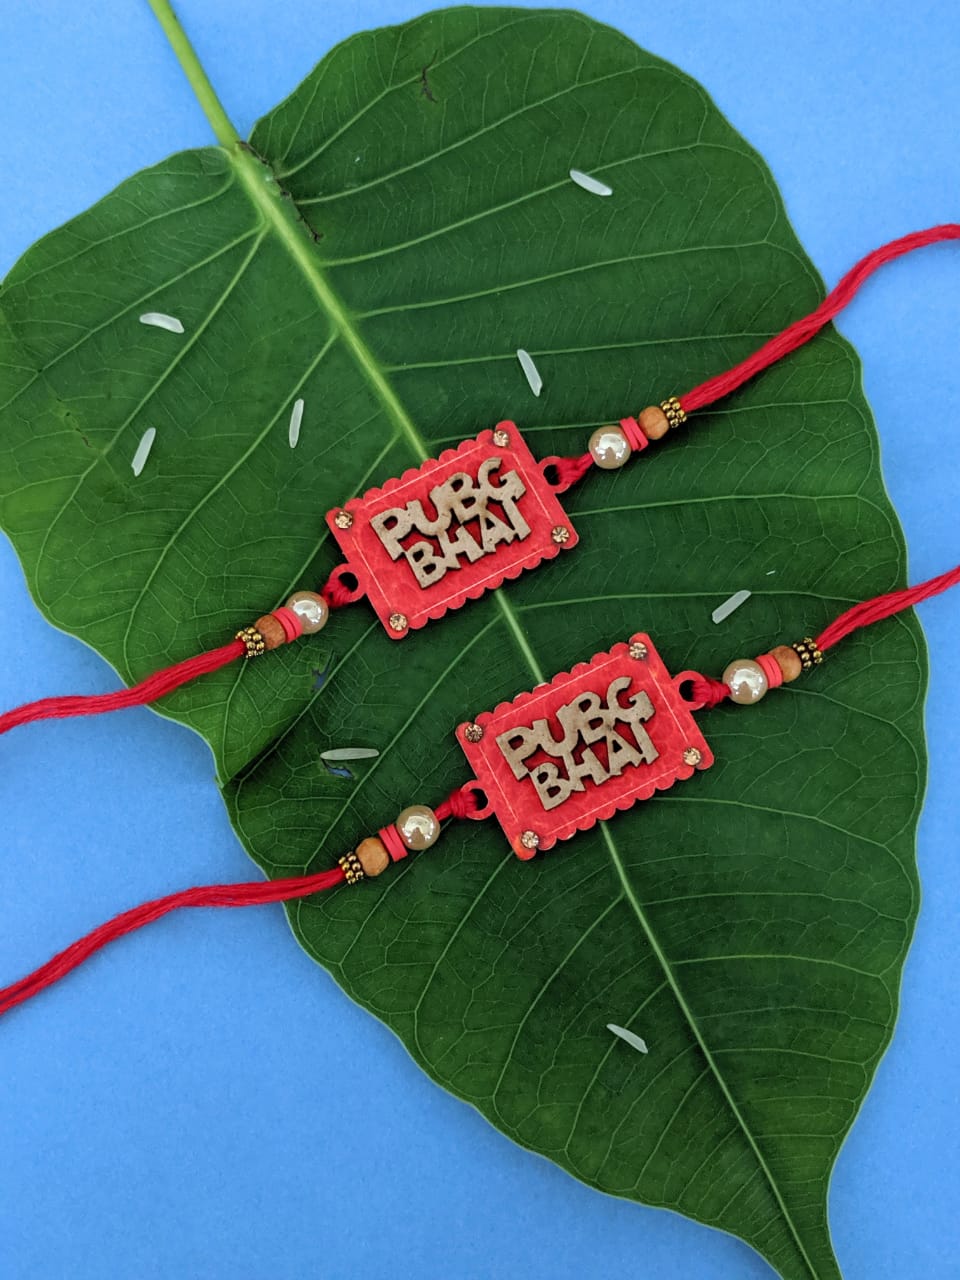 image for (Set of 2) Fancy PUBG Rakhi Set with Pubg Bhai Slogan White Pearls Tulsi Beads Red Thread Rakhi Combo